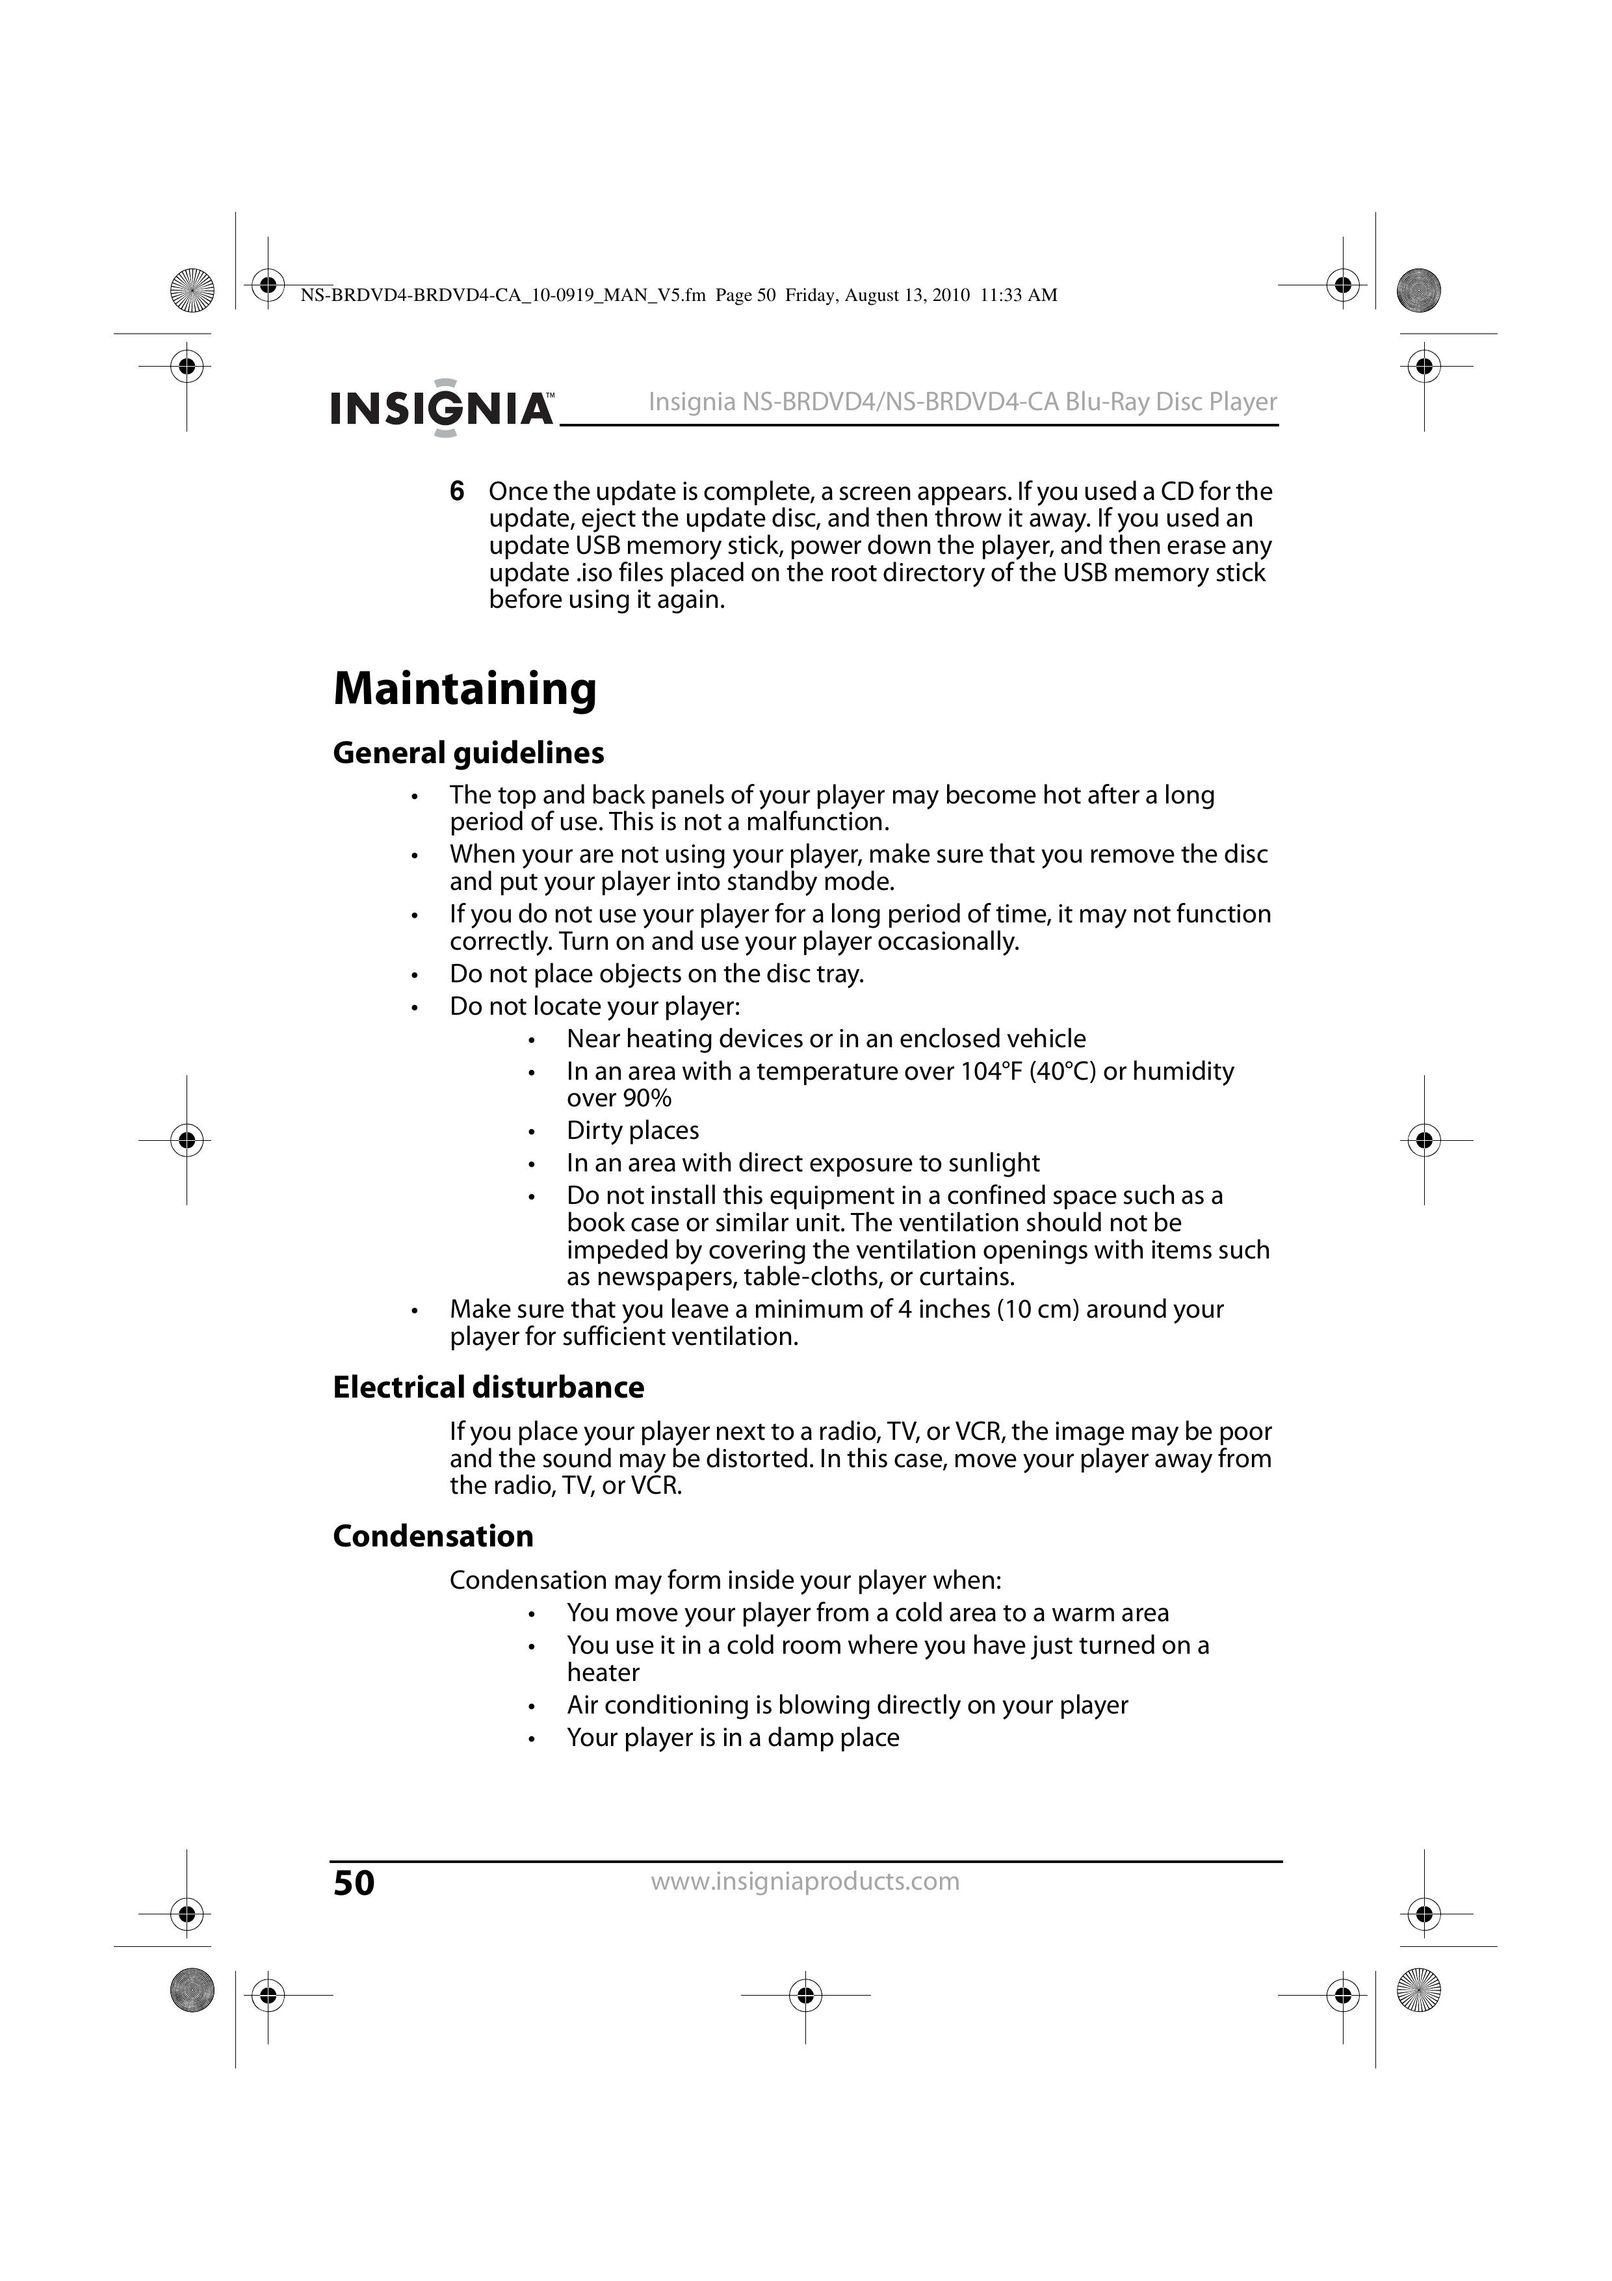 Insignia NS-BRDVD4-CA Blu-ray Player User Manual (Page 50)